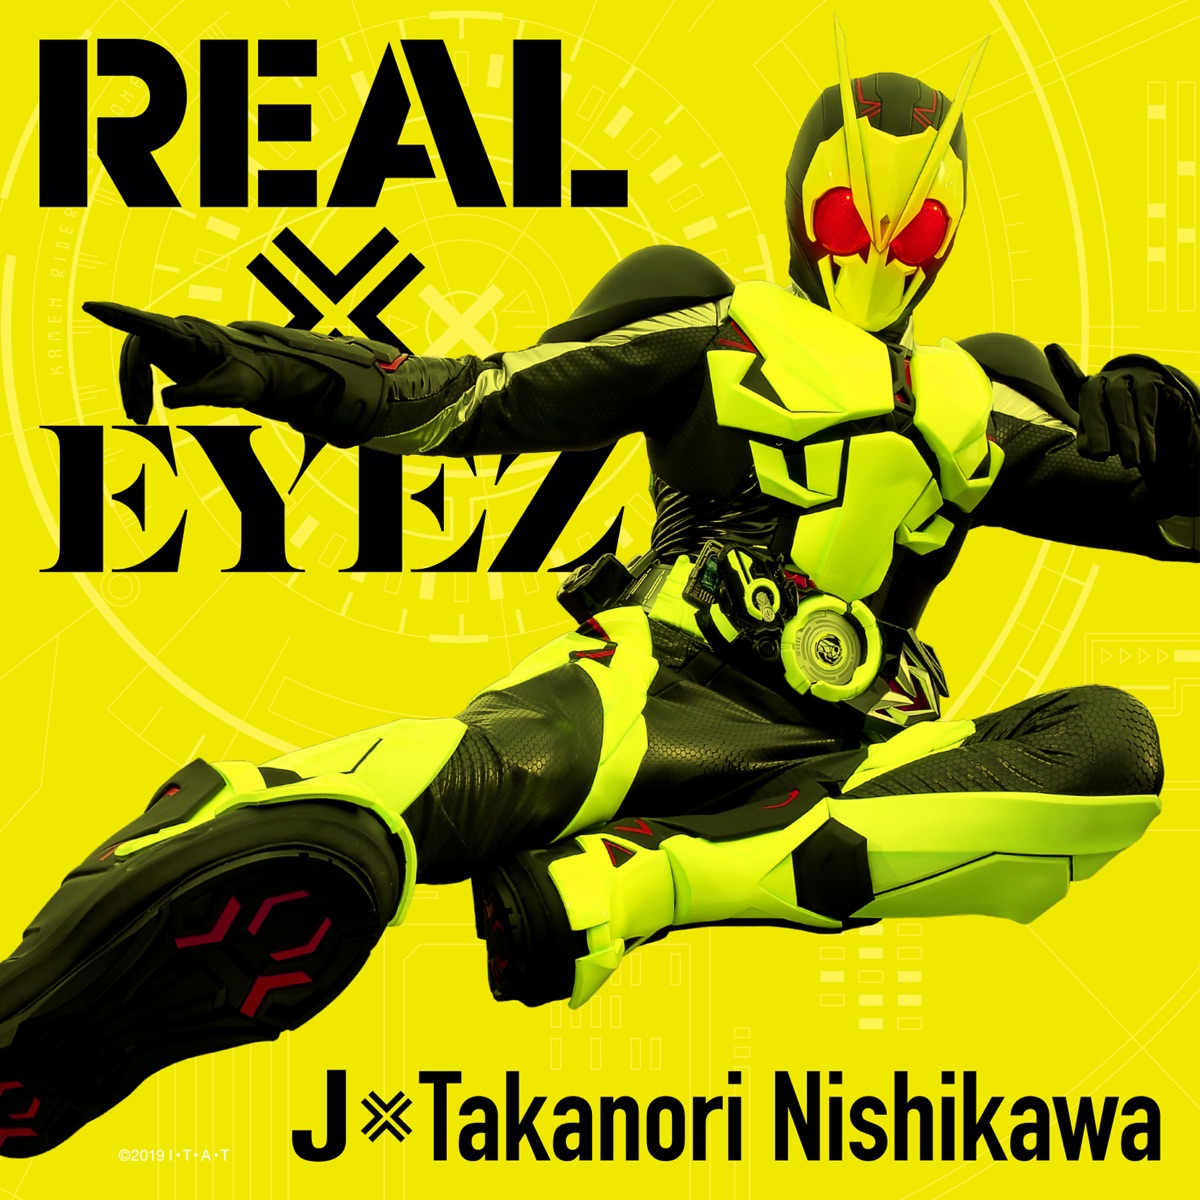 『J×Takanori Nishikawa - REAL×EYEZ』収録の『REAL×EYEZ』ジャケット